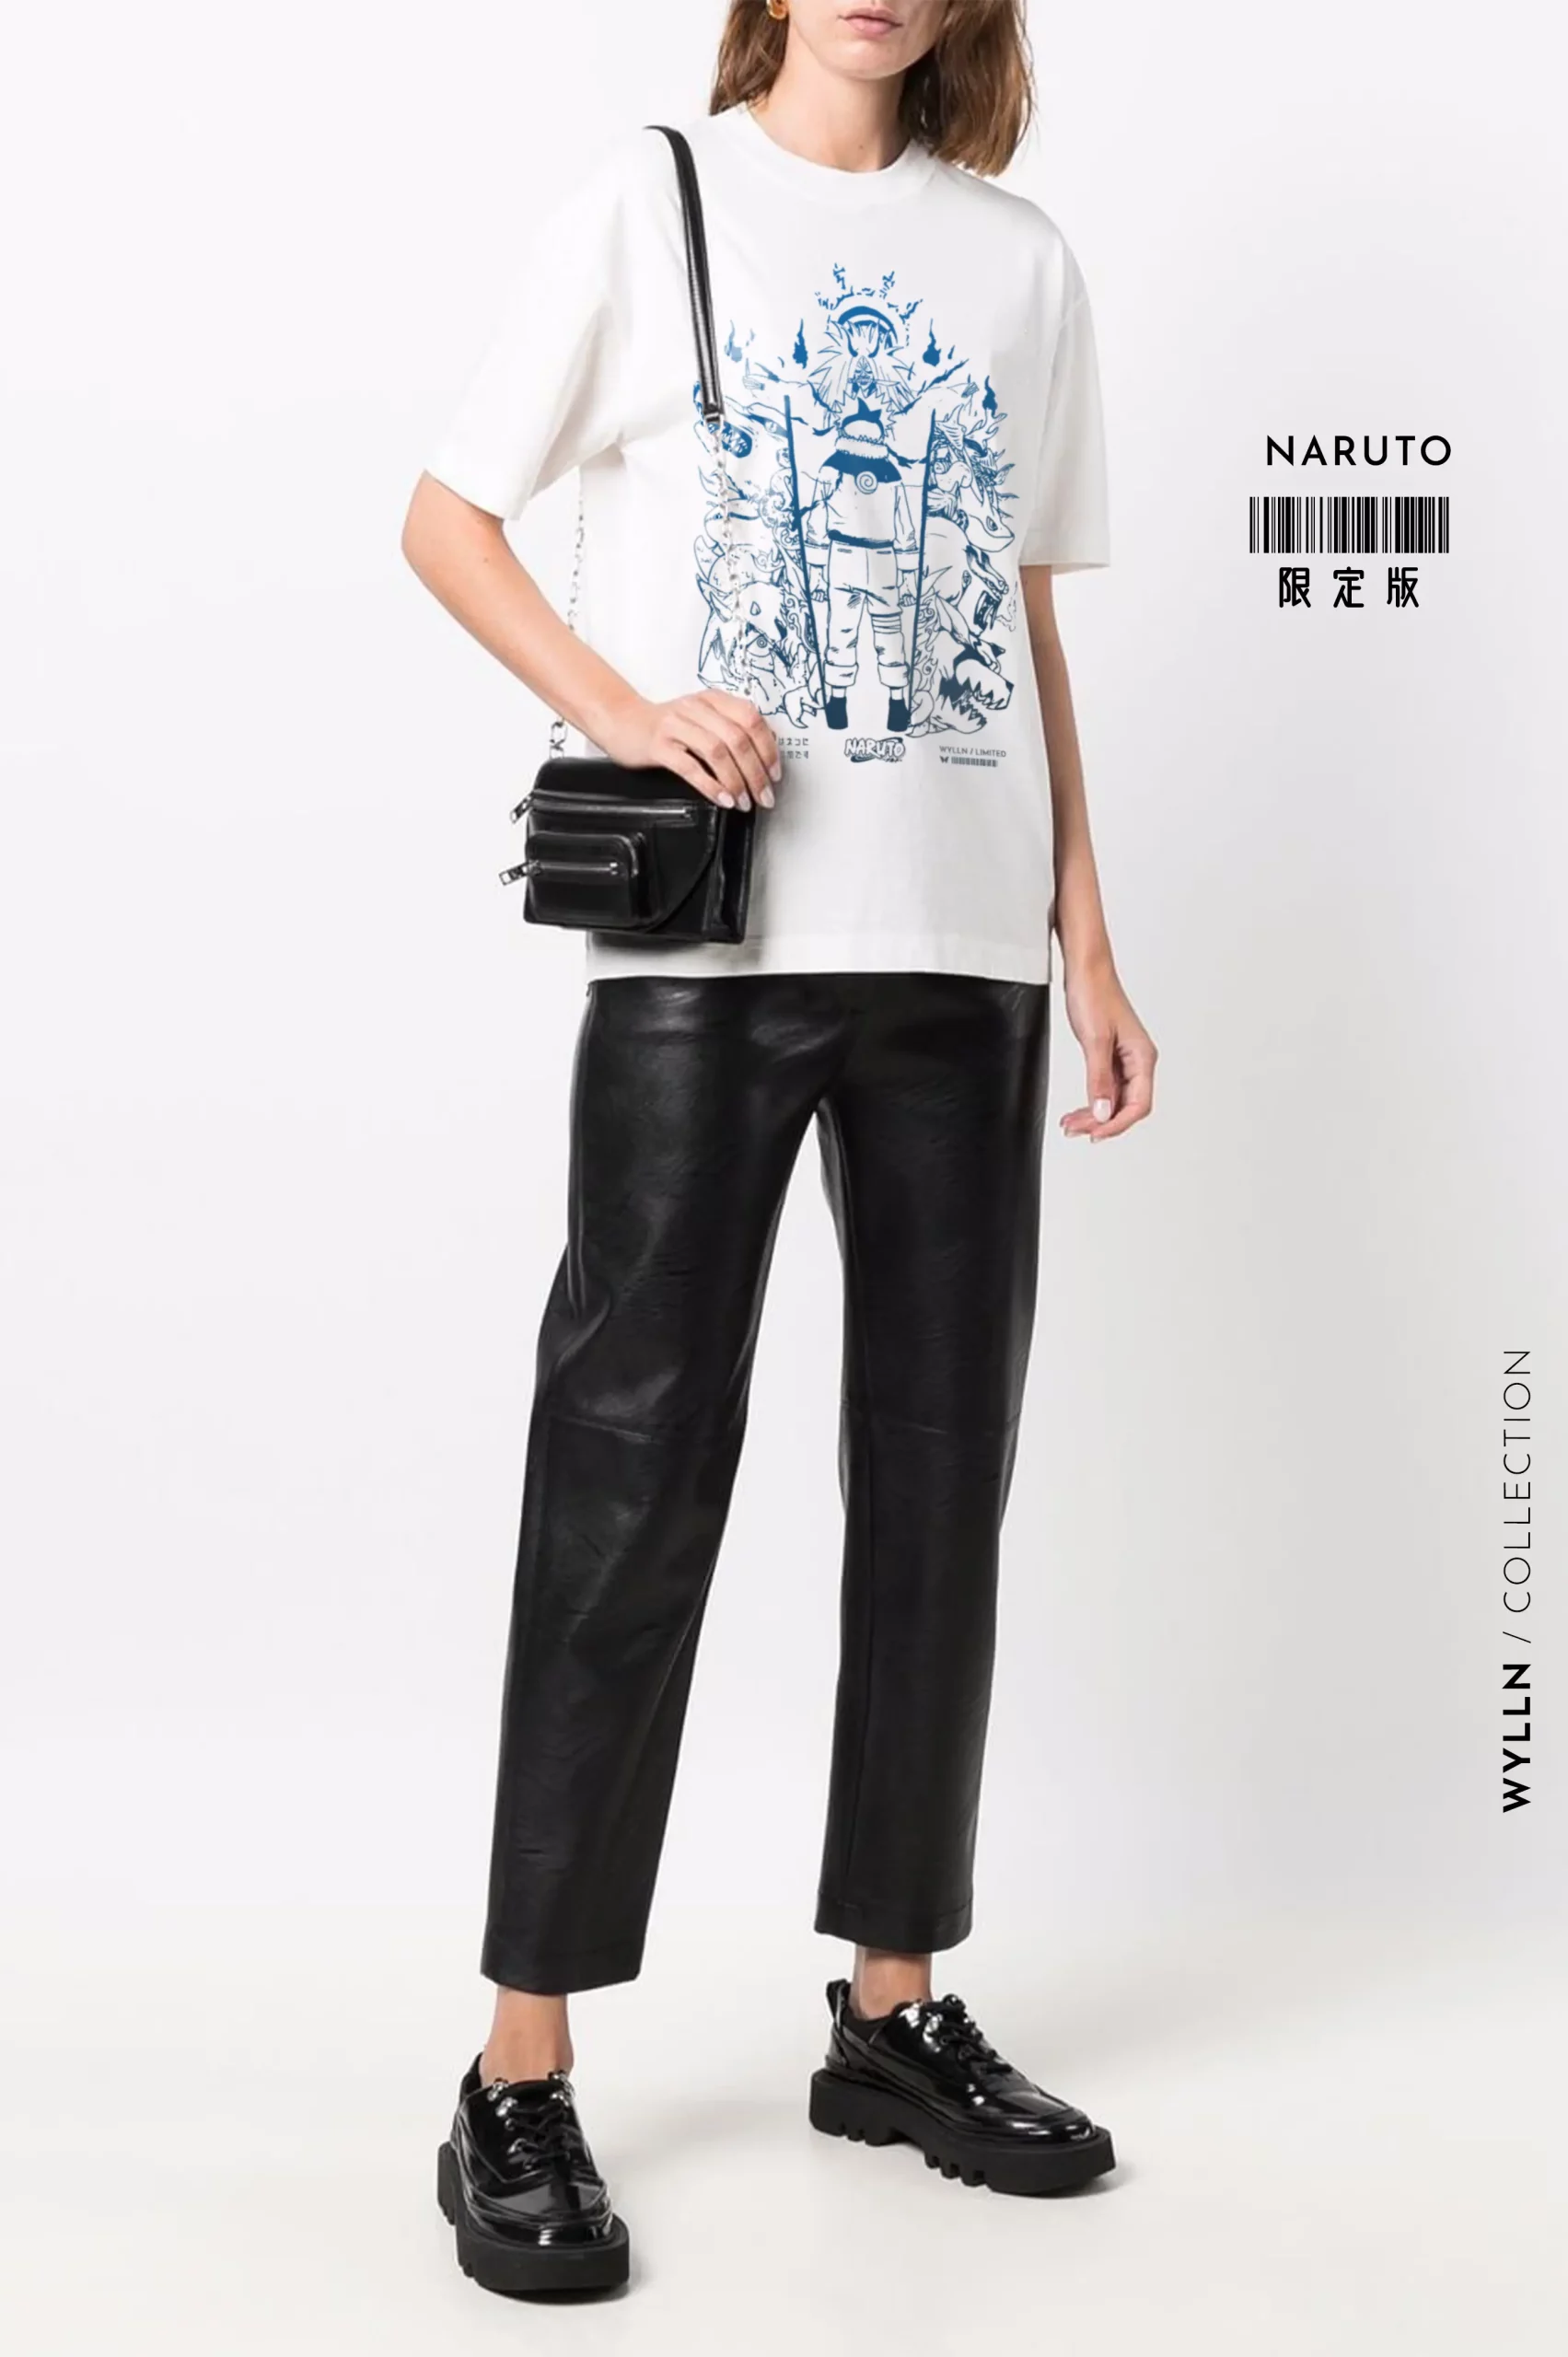 naruto-t-shirt-scaled